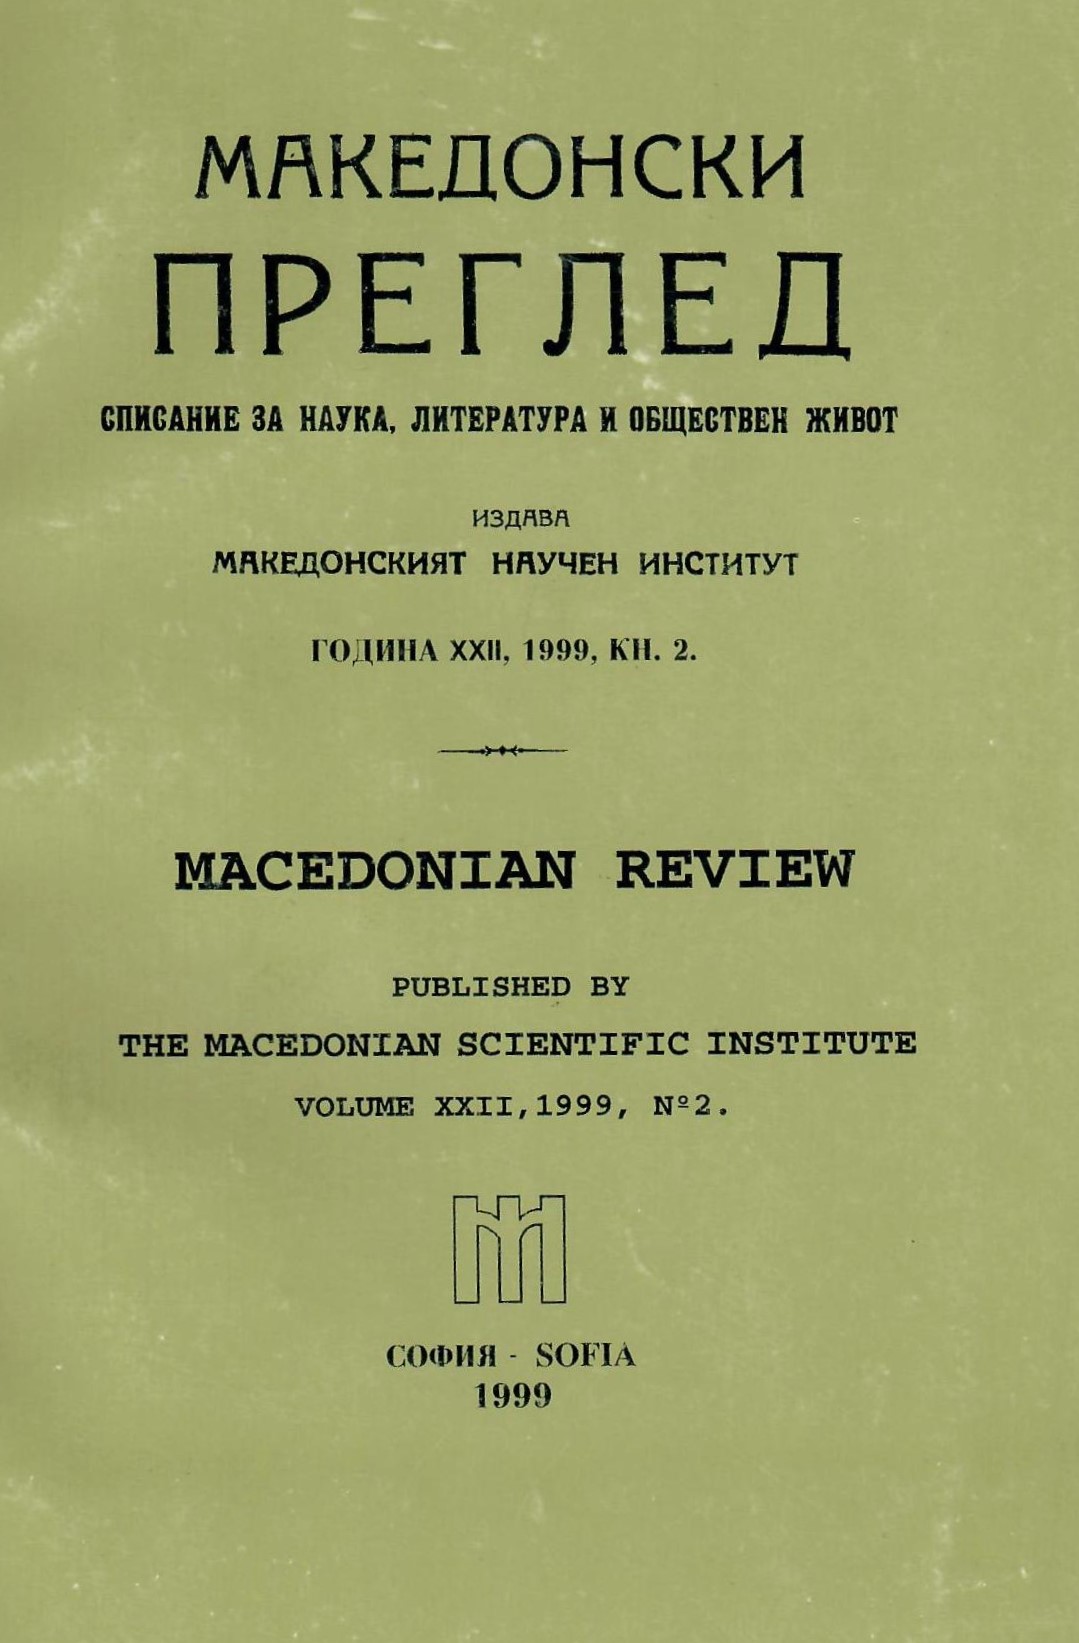 Kouzman Shapkarev's handwritten dictionary "'Bulgarian geographic names of various regions in Macedonia" Cover Image